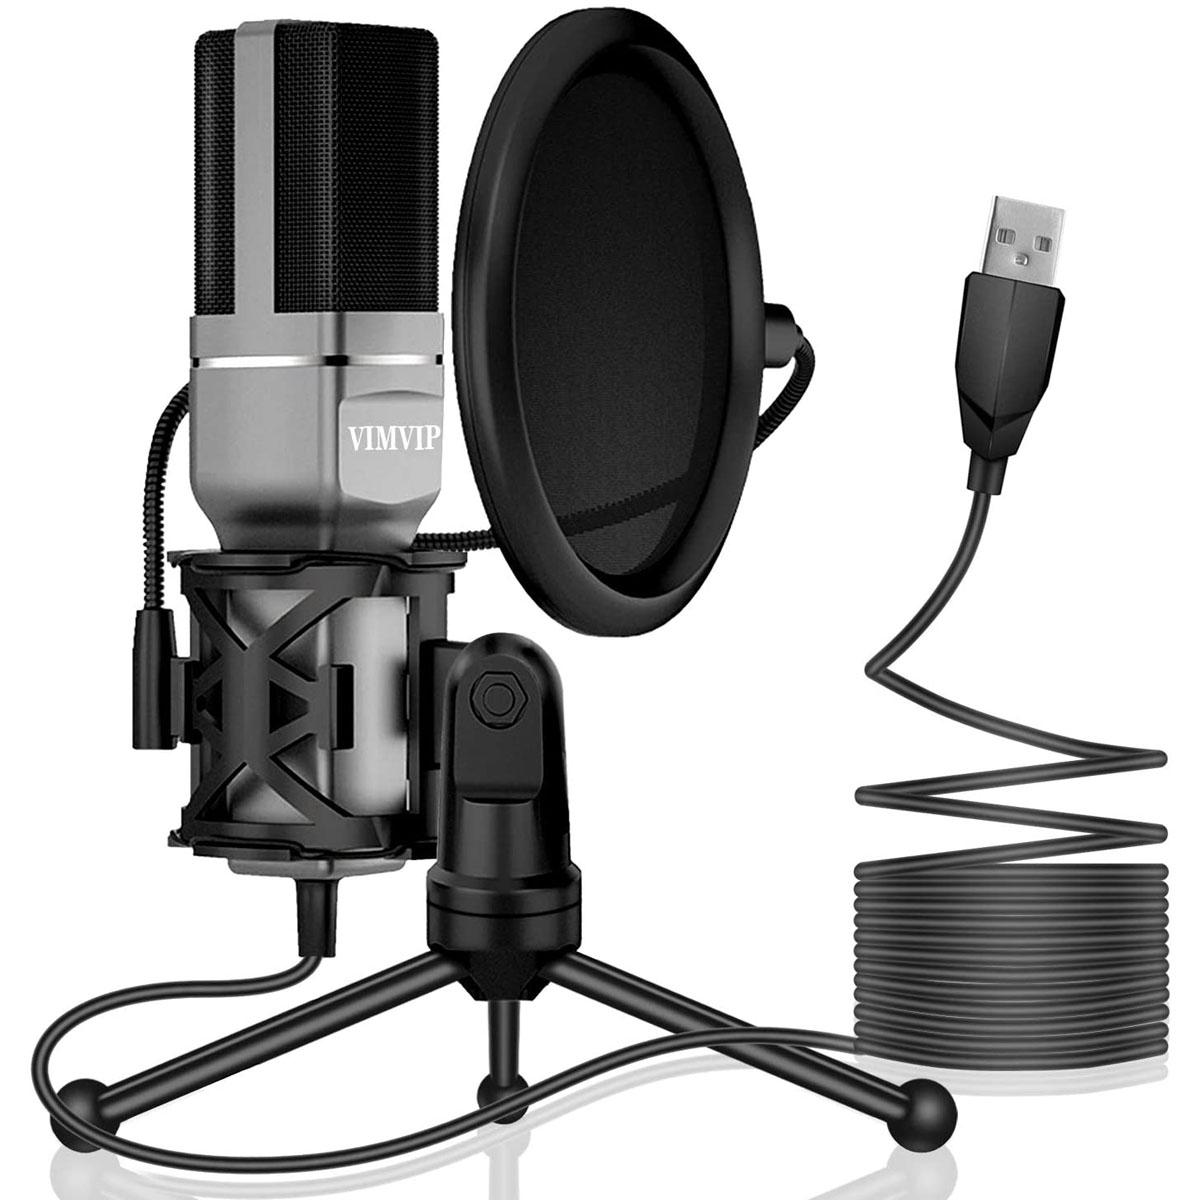 VIMVIP USB Computer Microphone for $19.49